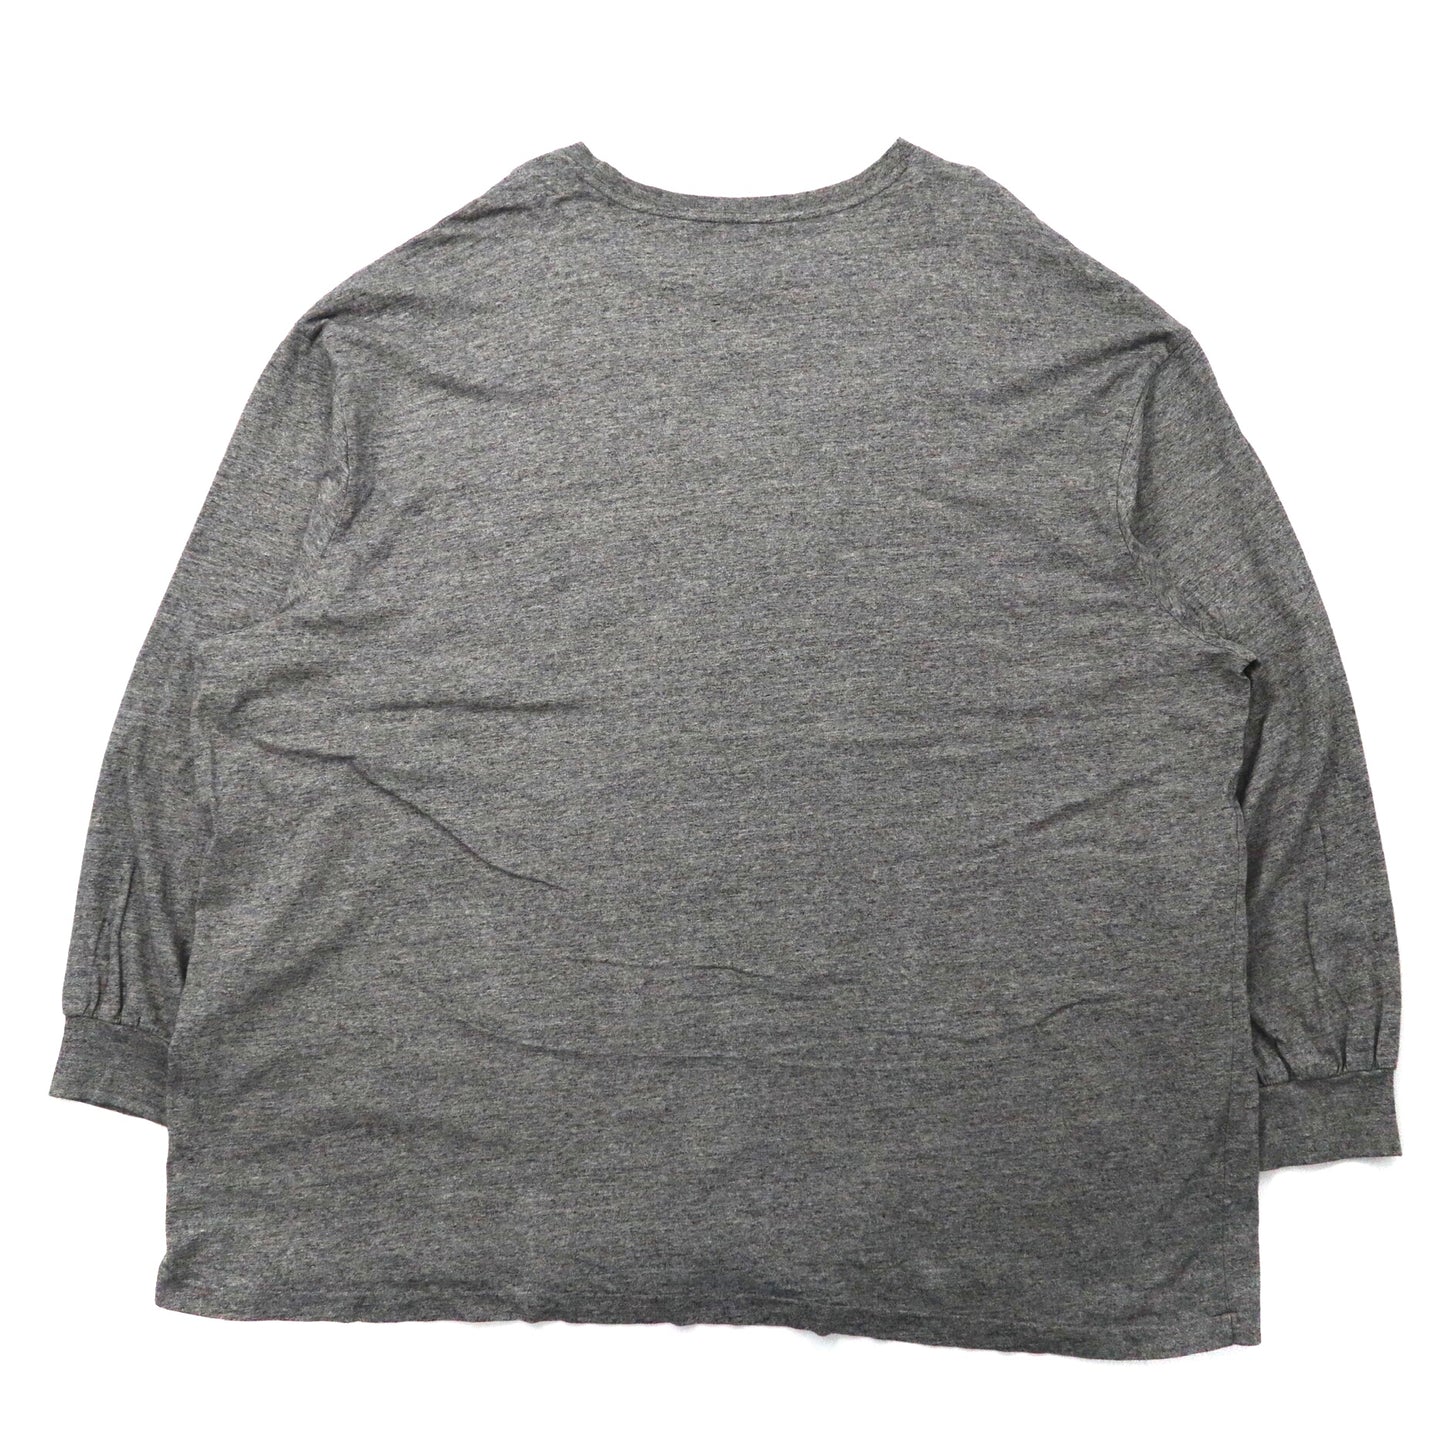 POLO RALPH LAUREN ビッグサイズ ロングスリーブTシャツ 4XBL BIG グレー コットン ポケット付き スモールポニー刺繍